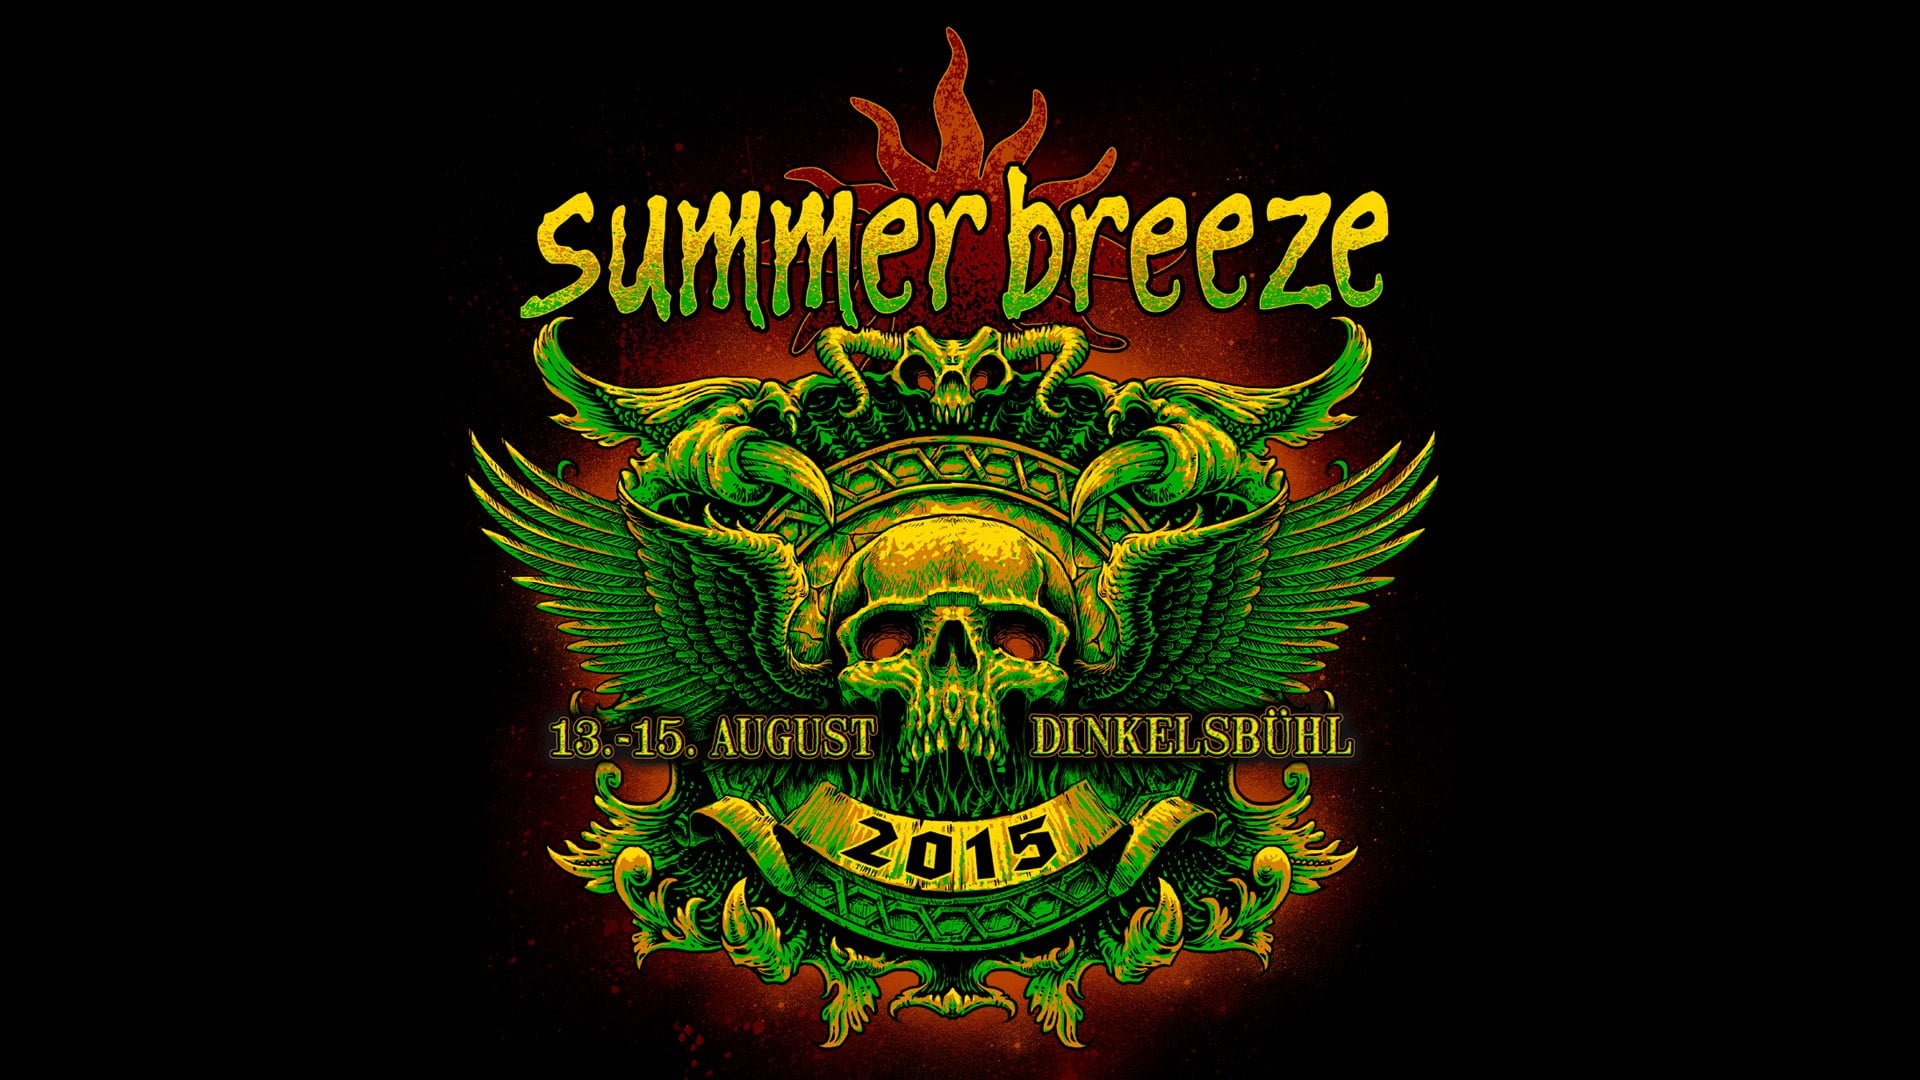 2015 Summer Breeze advertisement, Summer Breeze, heavy metal, festivals